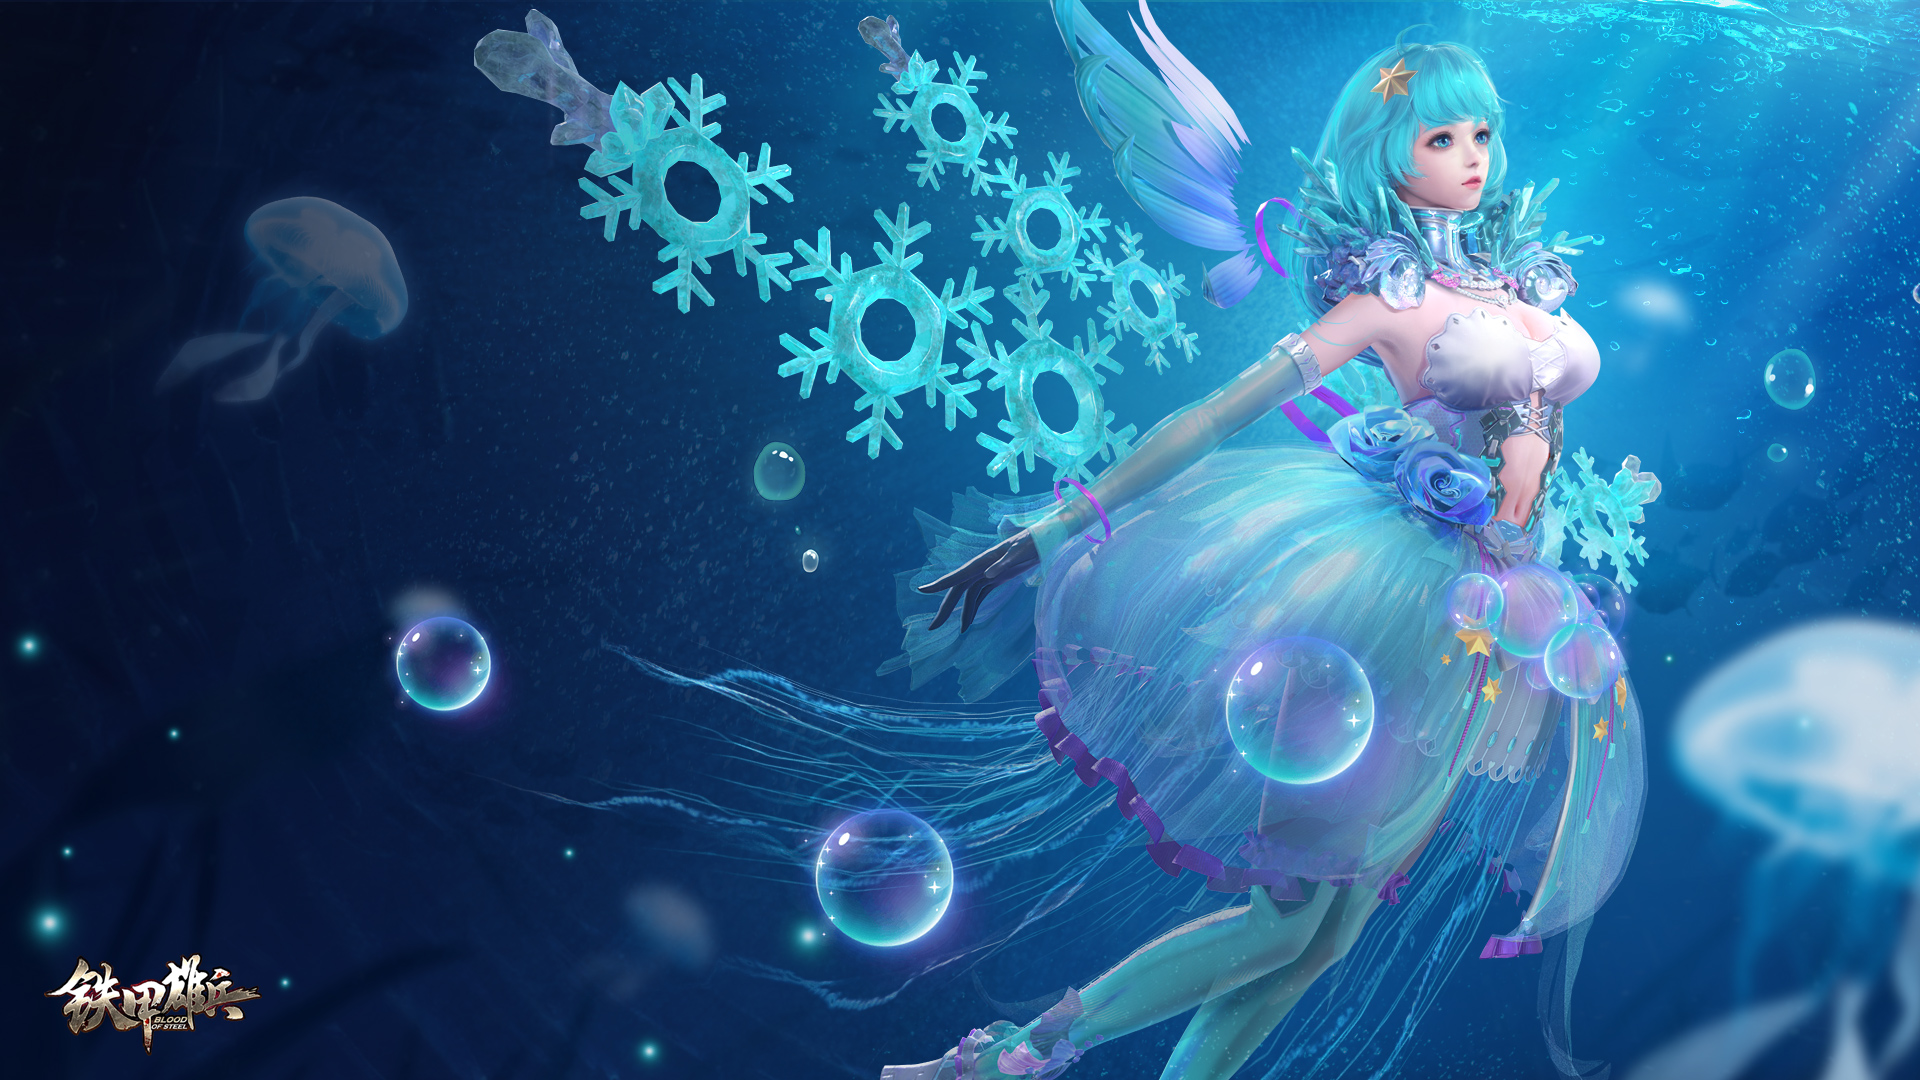 General 1920x1080 Blood of Steel PC gaming fantasy girl fantasy art blue hair underwater